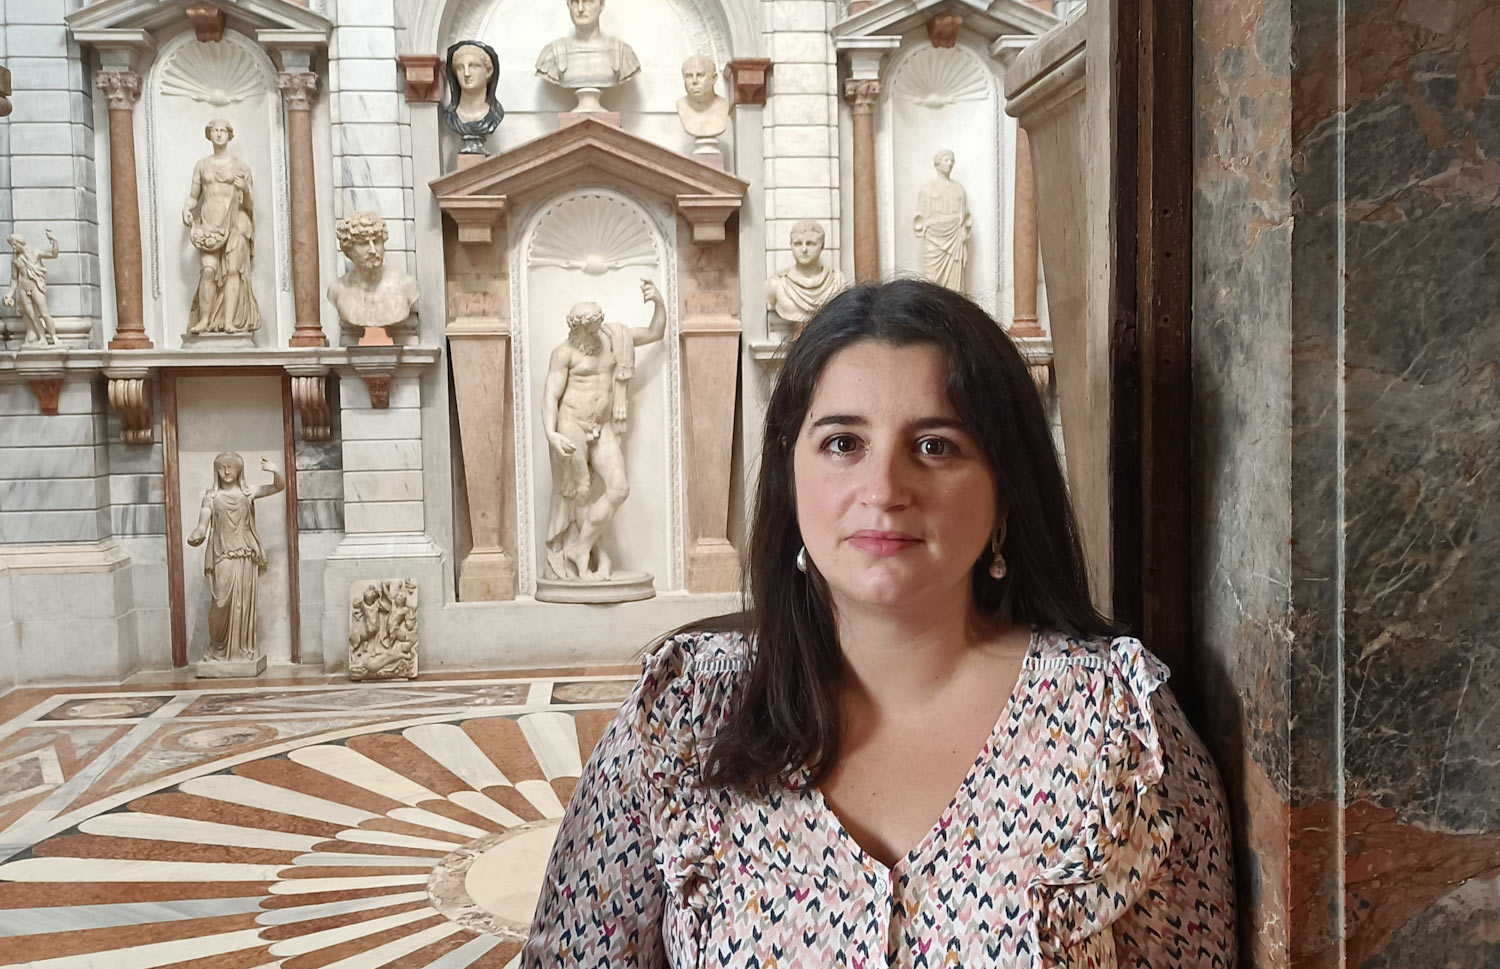 Venice, here is the new director of Palazzo Grimani: Valeria Finocchi, under 40